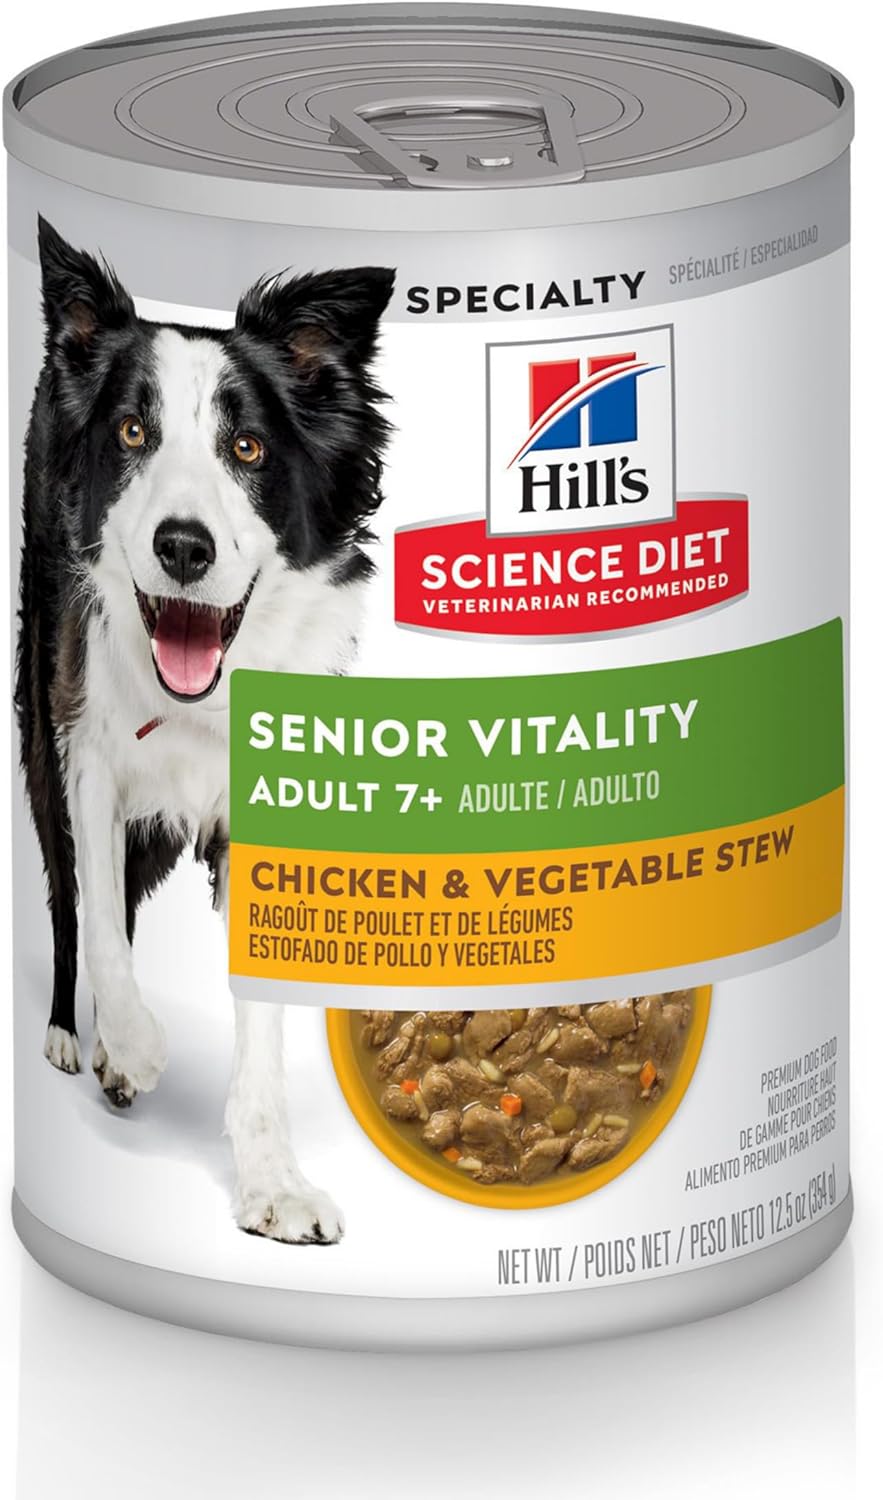 Hill's Science Diet Senior Vitality, Senior Adult 7+, Senior Premium Nutrition, Wet Dog Food, Chicken & Vegetables Stew, 12.5 oz Can, Case of 13